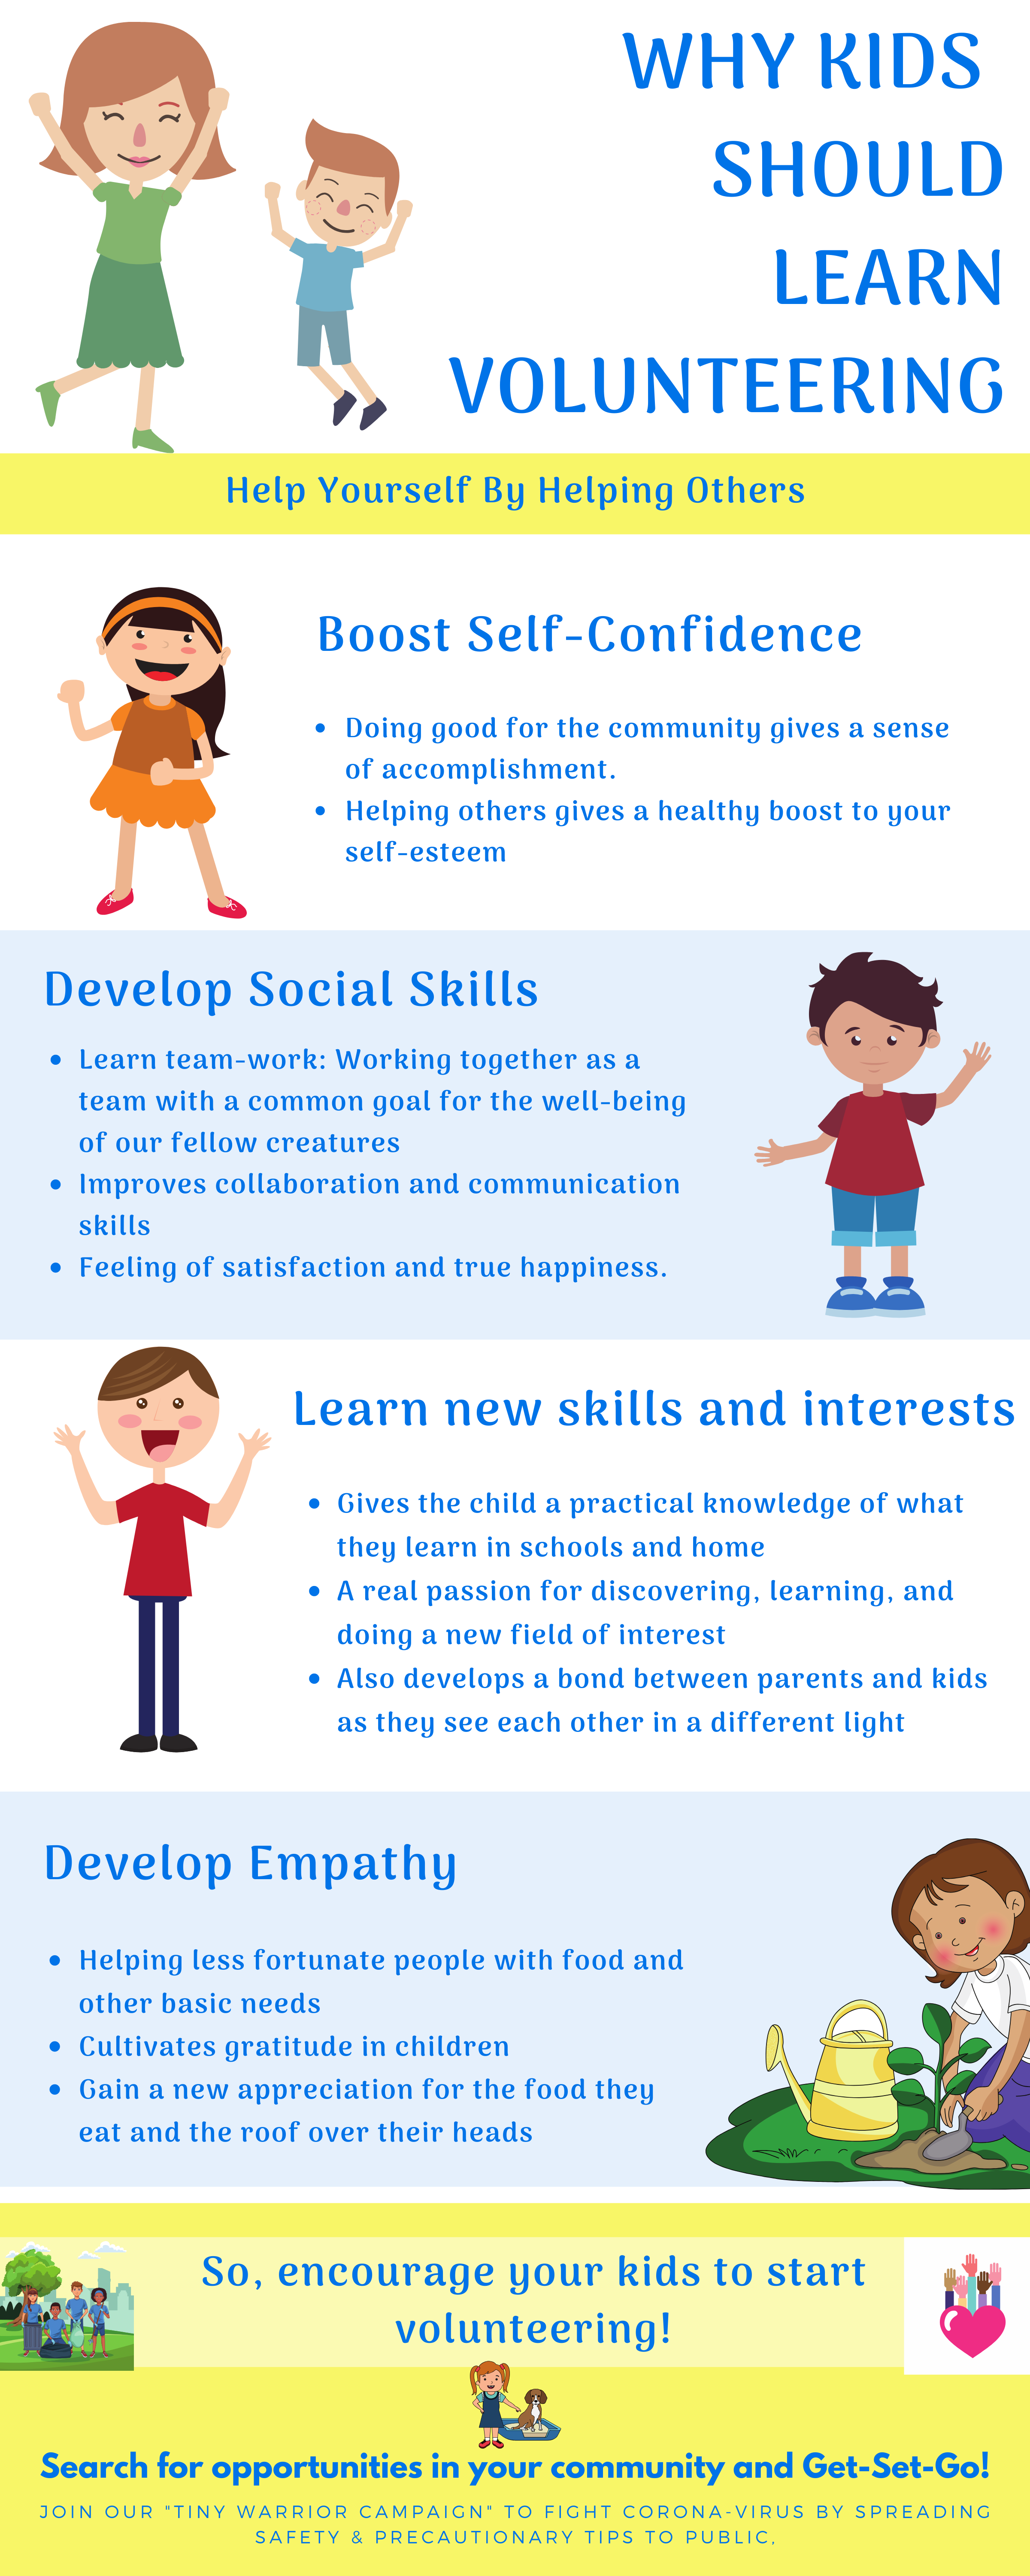 Volunteering and its benefits in kids